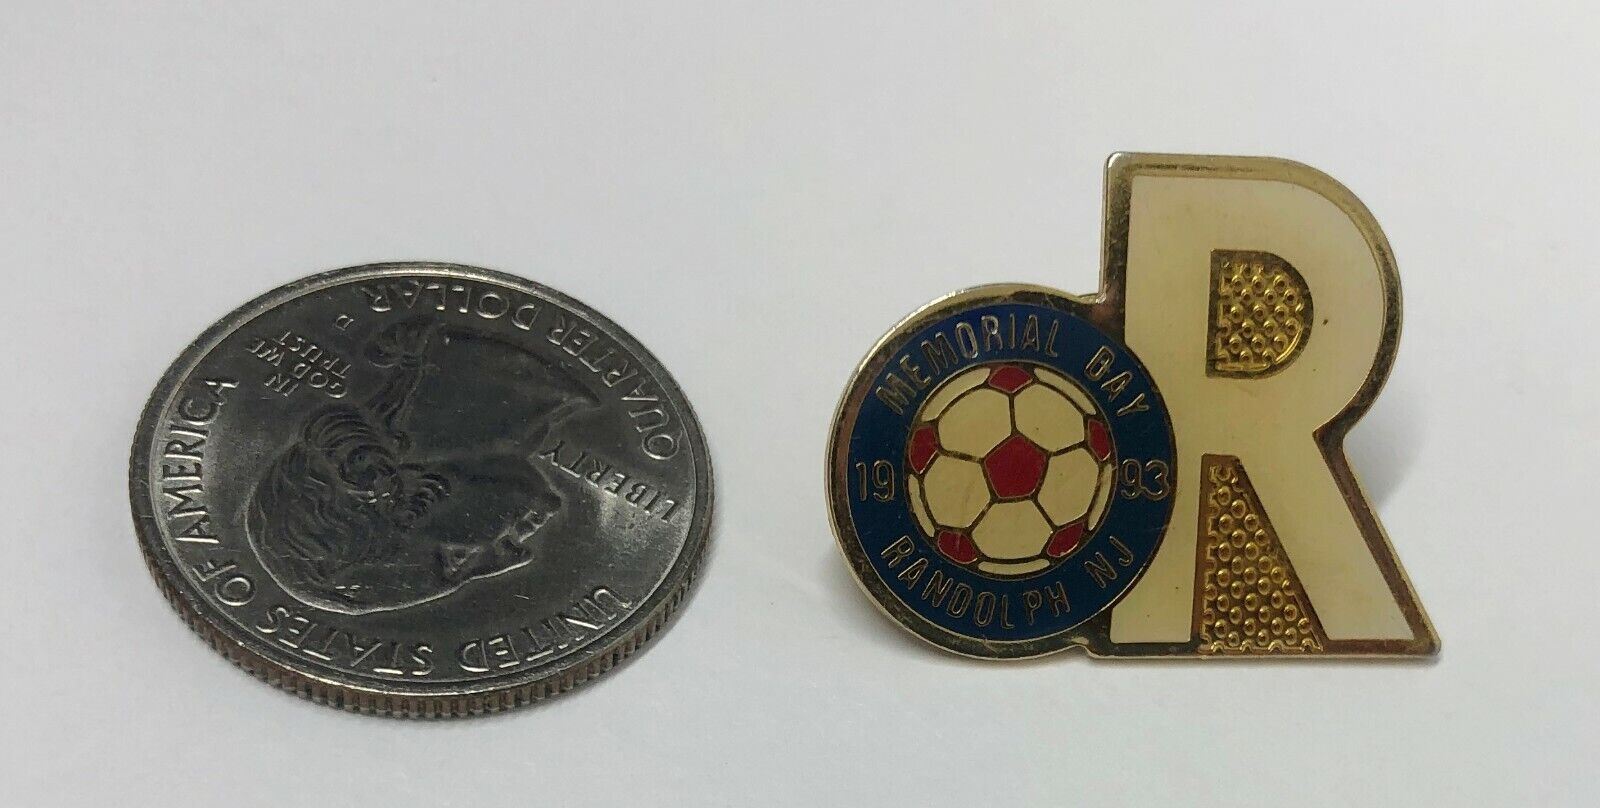 1993 Memorial Day Soccer Randolph New Jersey Pin 